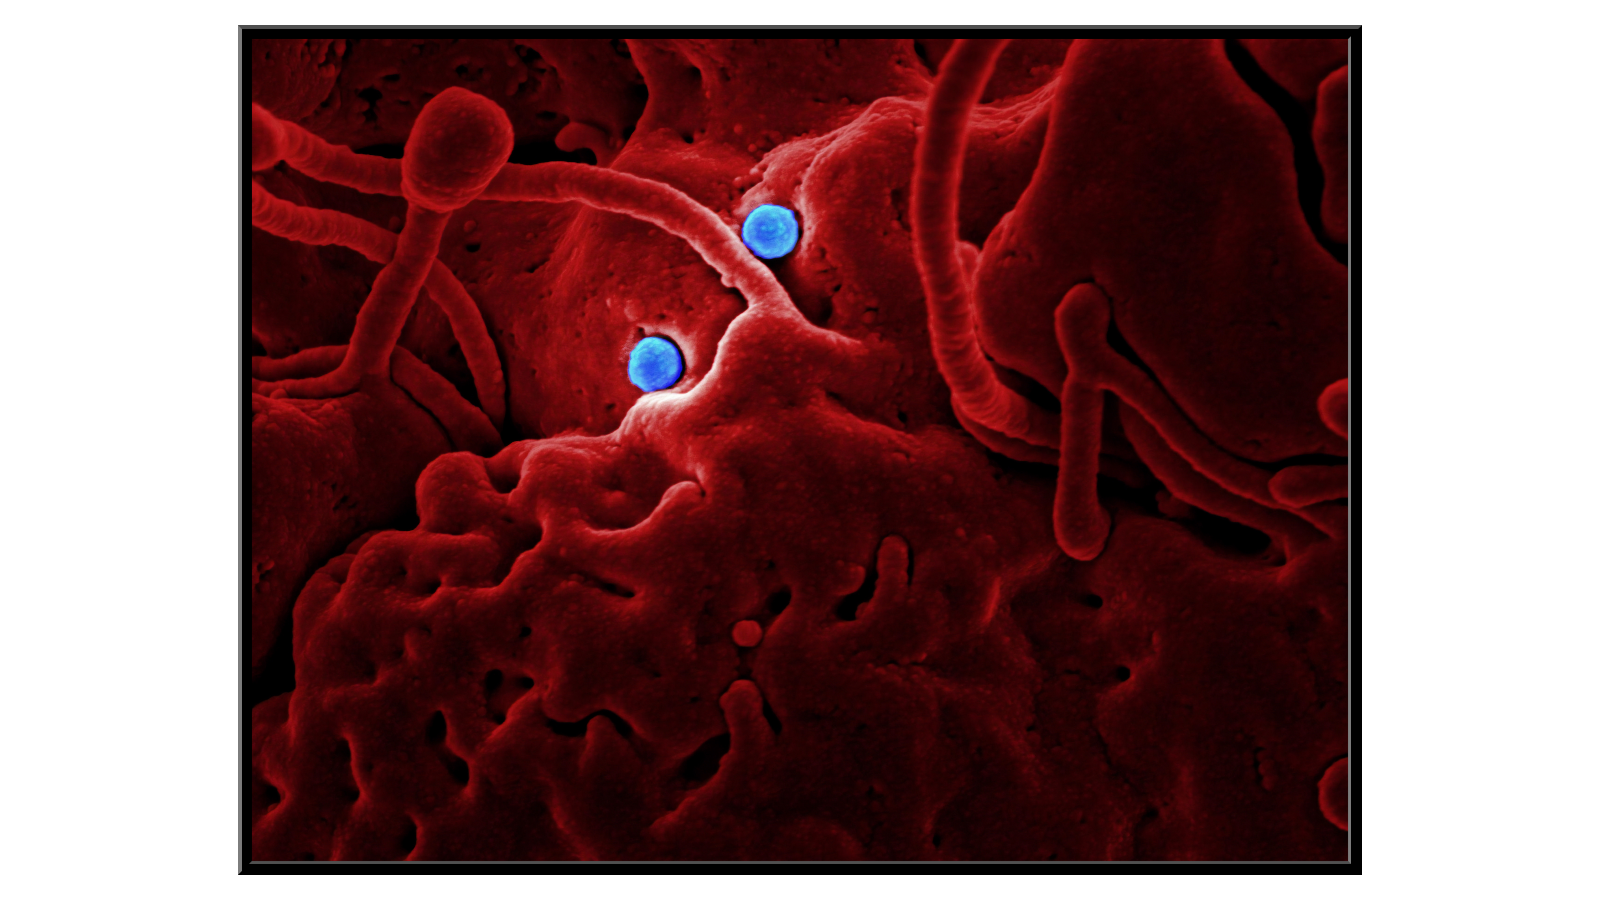 MERS-CoV virus penetrating the epithelium